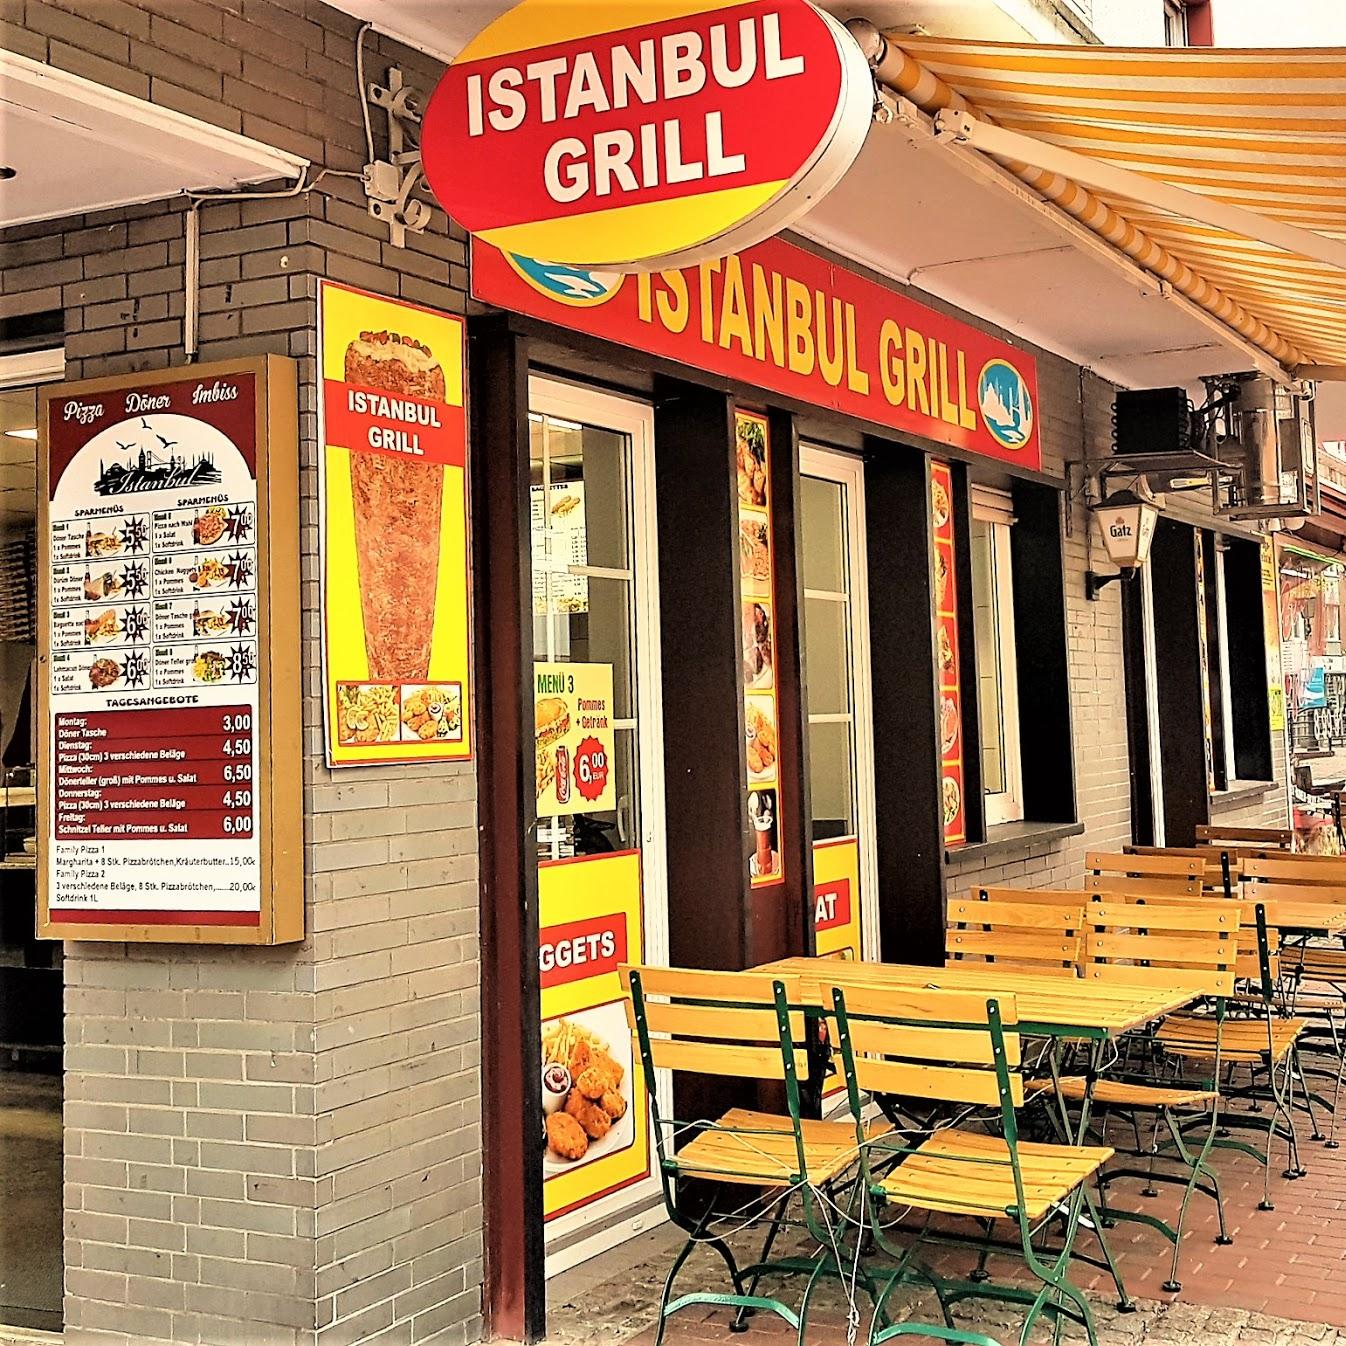 Restaurant "Istanbul Grill" in Haltern am See